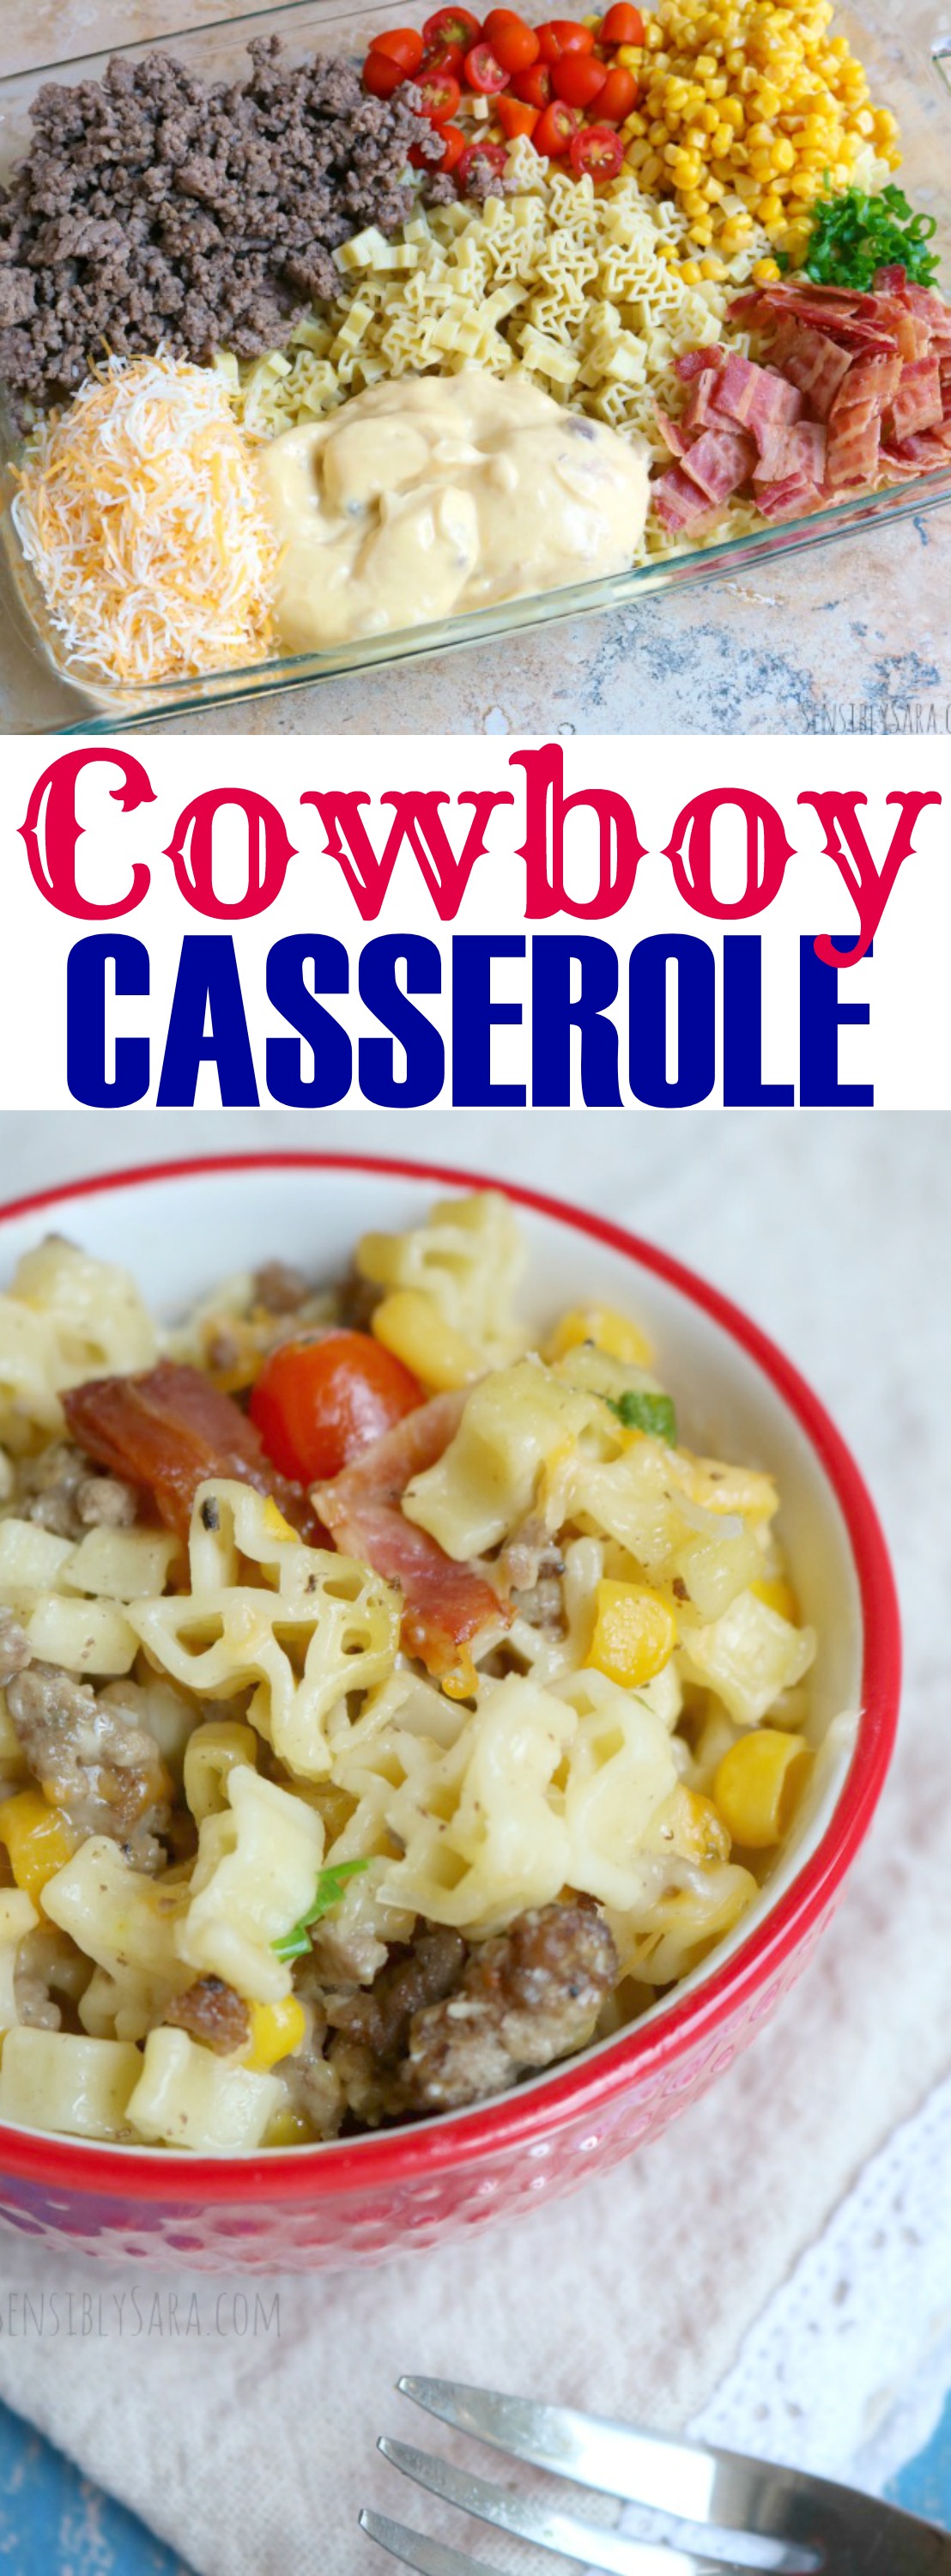 Cowboy Casserole Recipe | SensiblySara.com